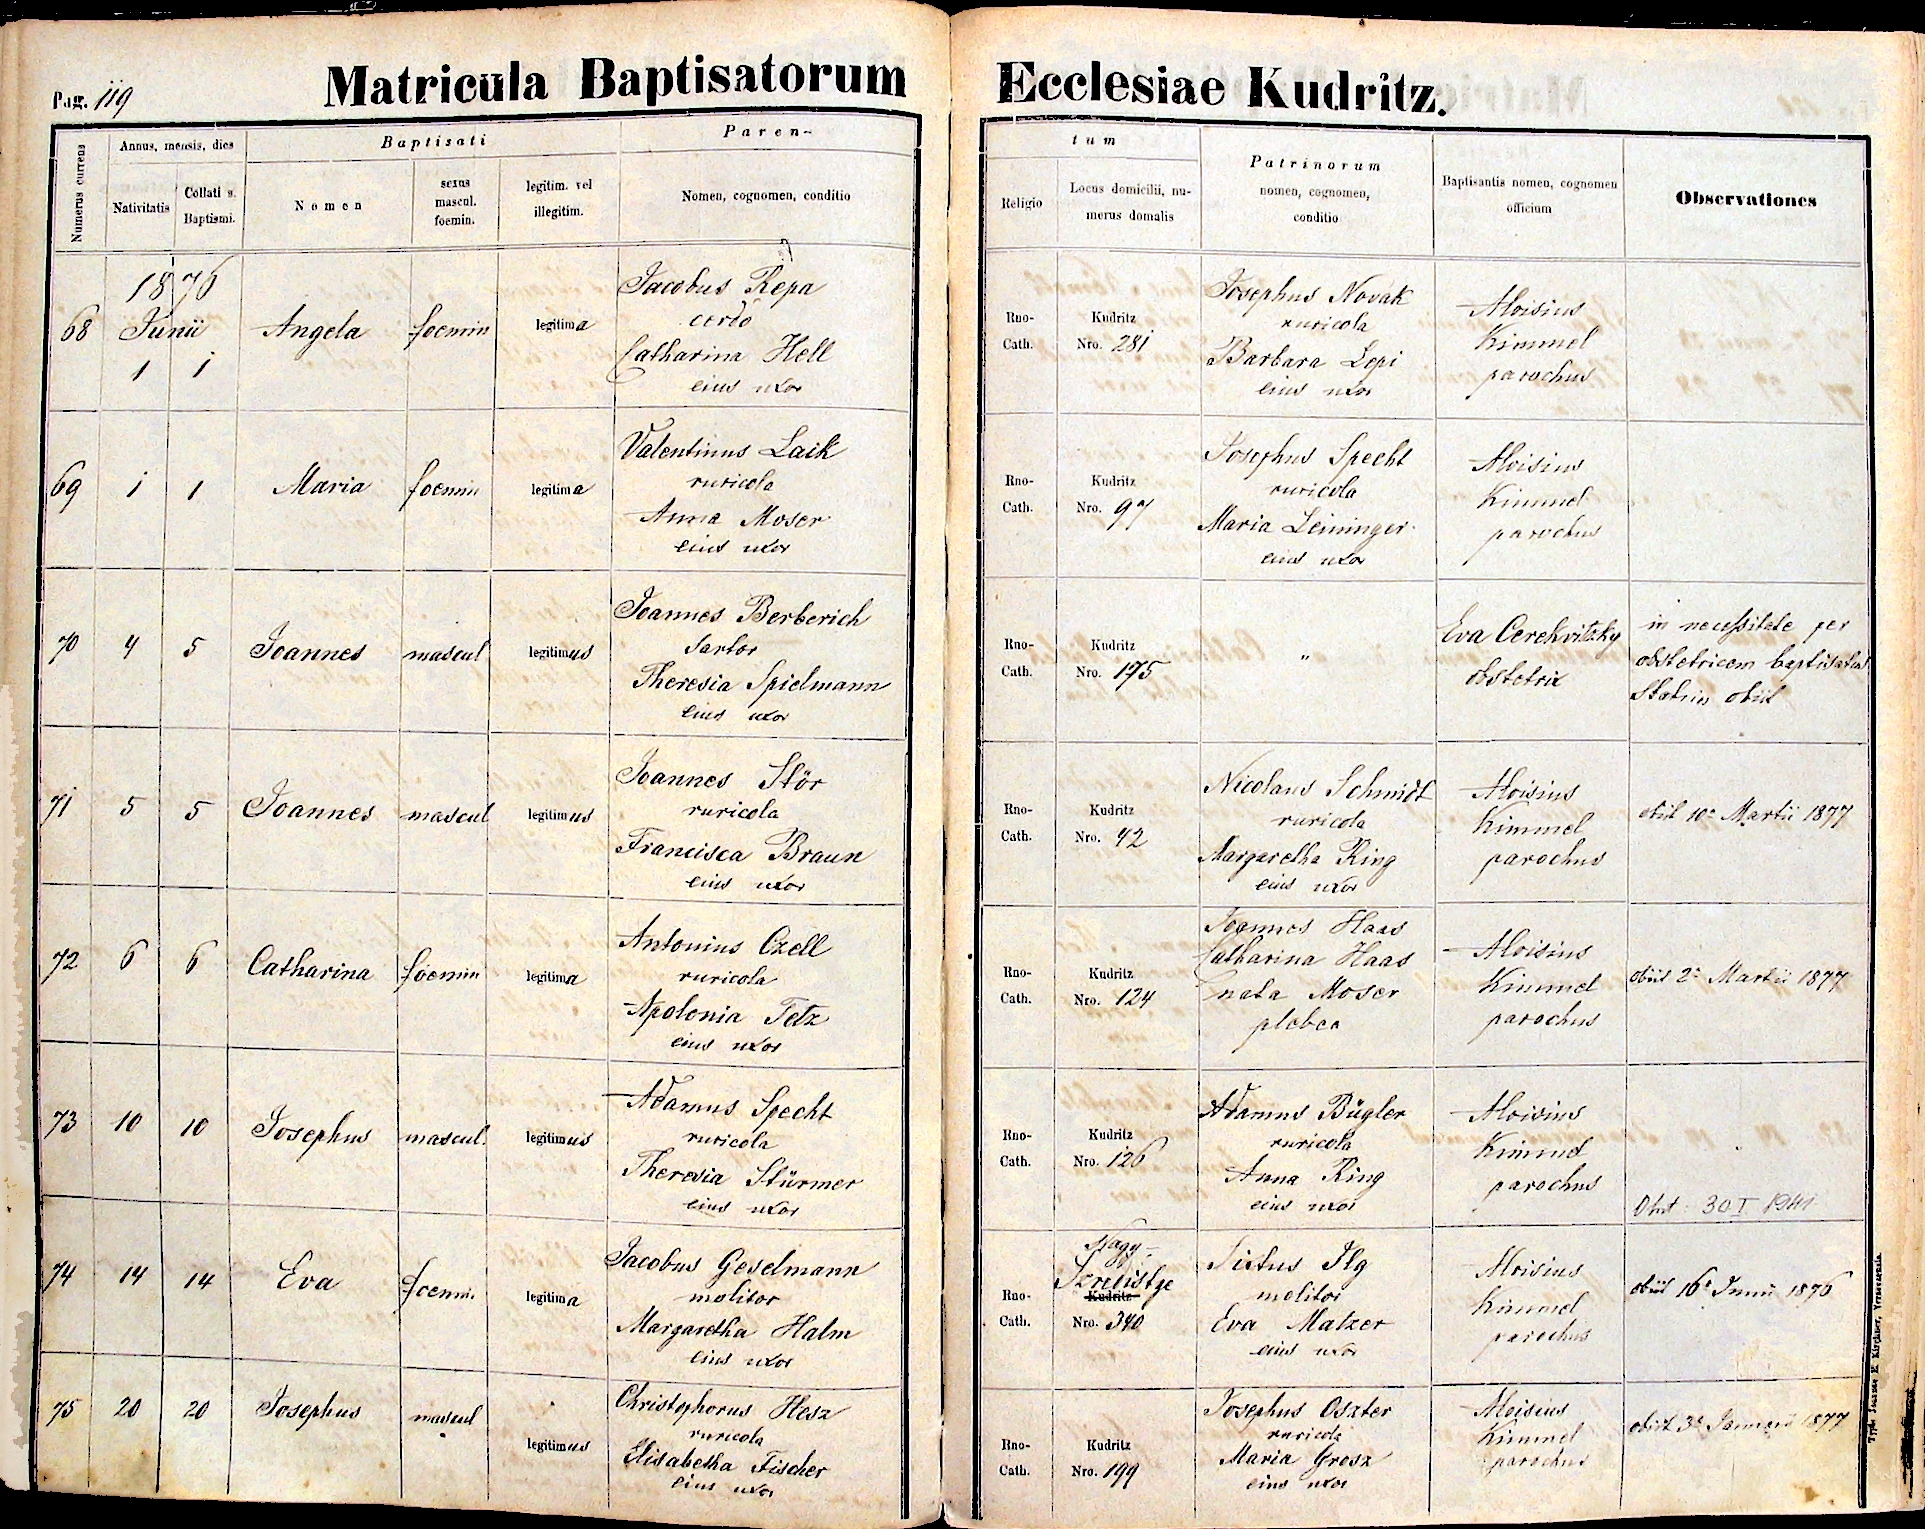 images/church_records/BIRTHS/1884-1899B/1891/119